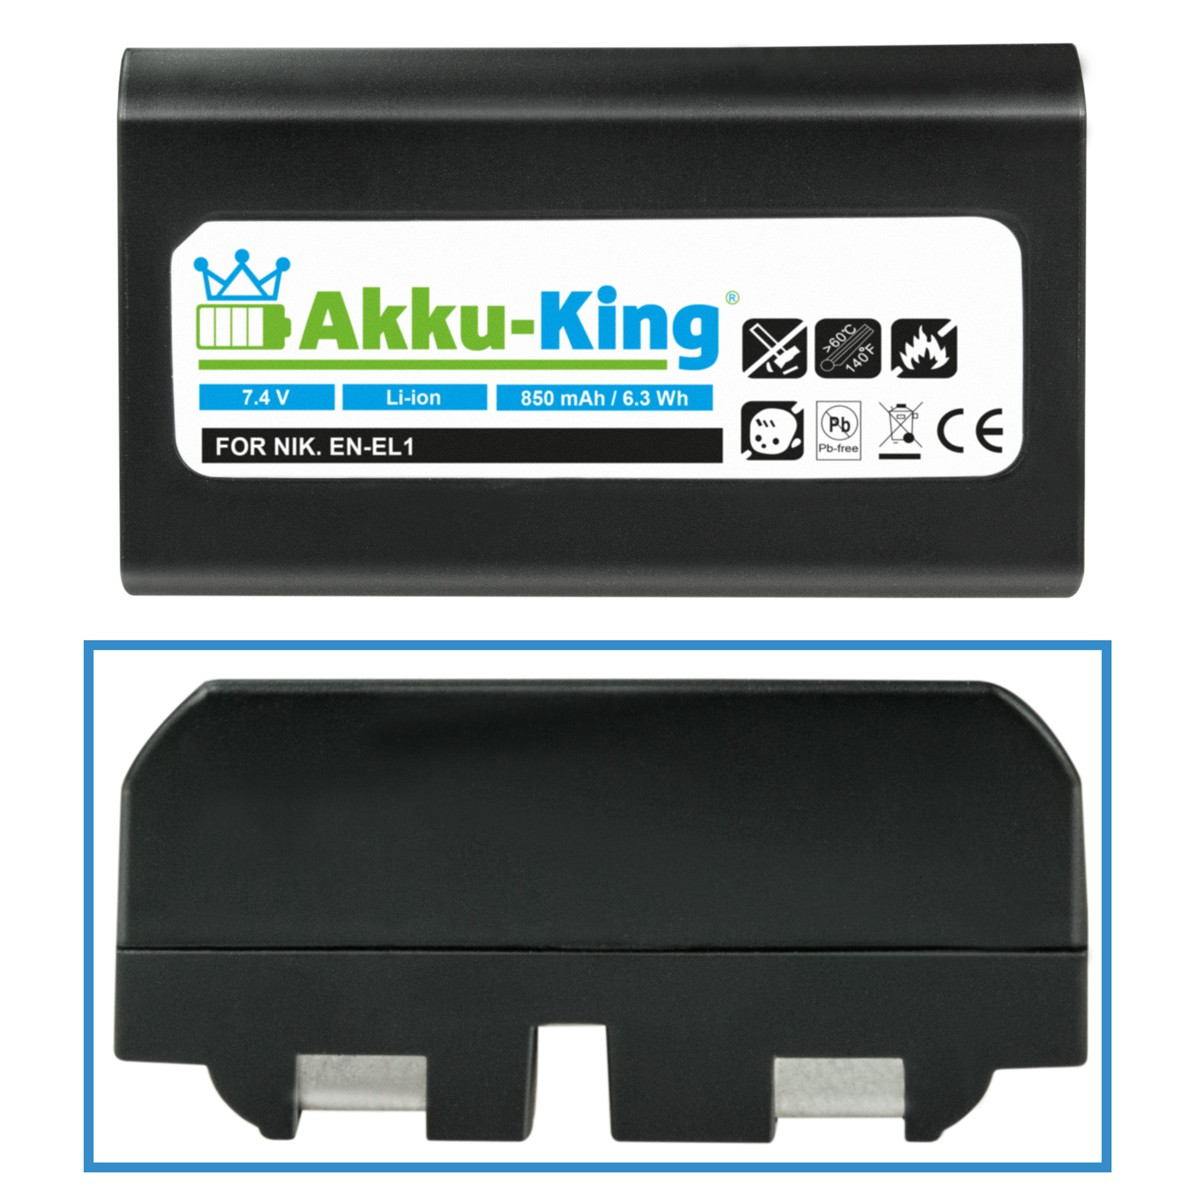 Akku Volt, 7.4 EN-EL1 Nikon 850mAh Kamera-Akku, kompatibel AKKU-KING mit Li-Ion